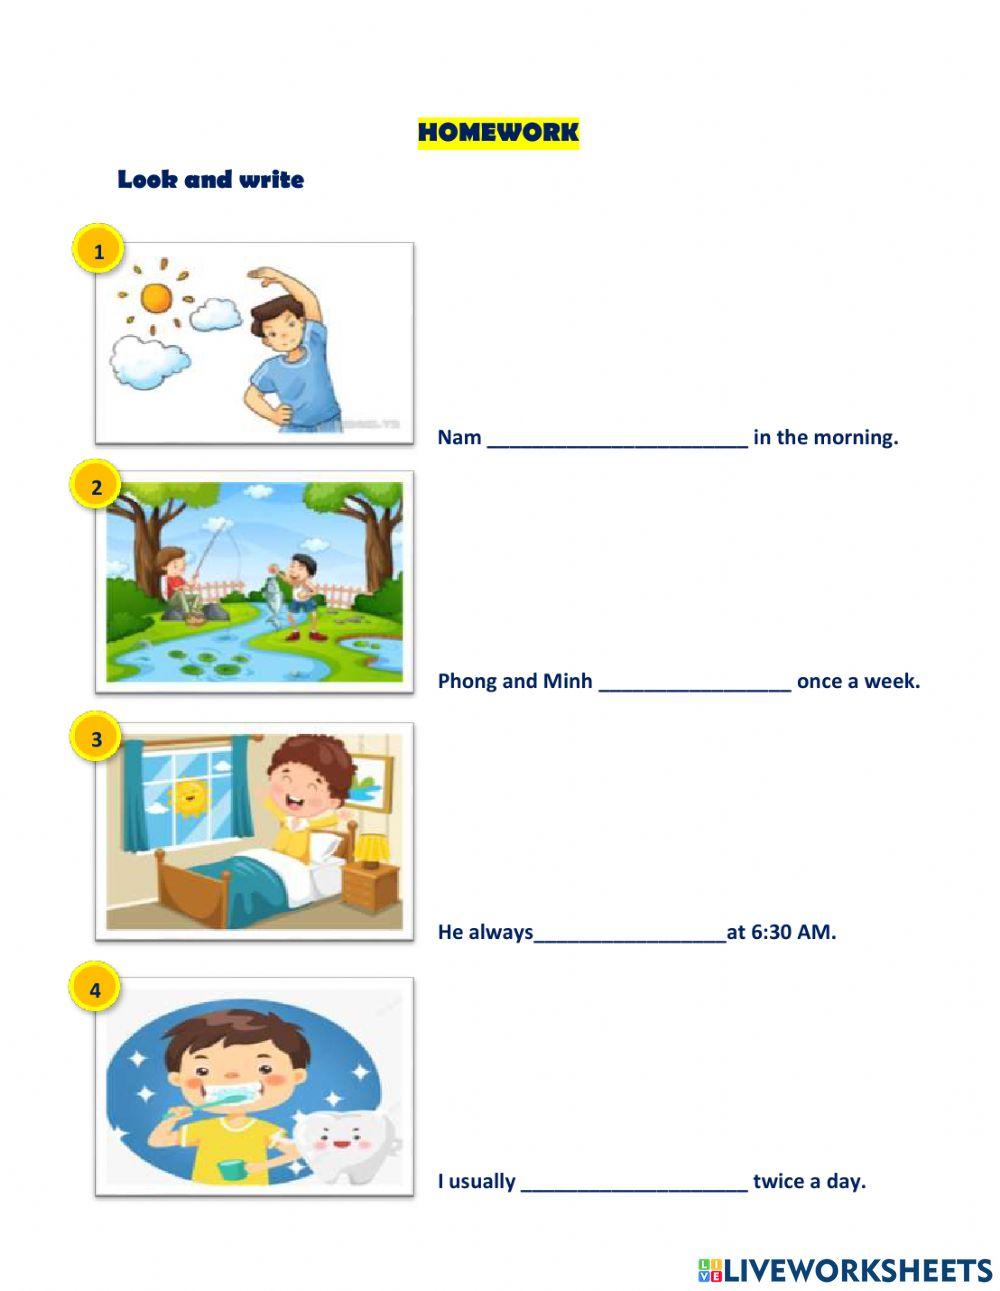 Homework-lesson 1-daily routine